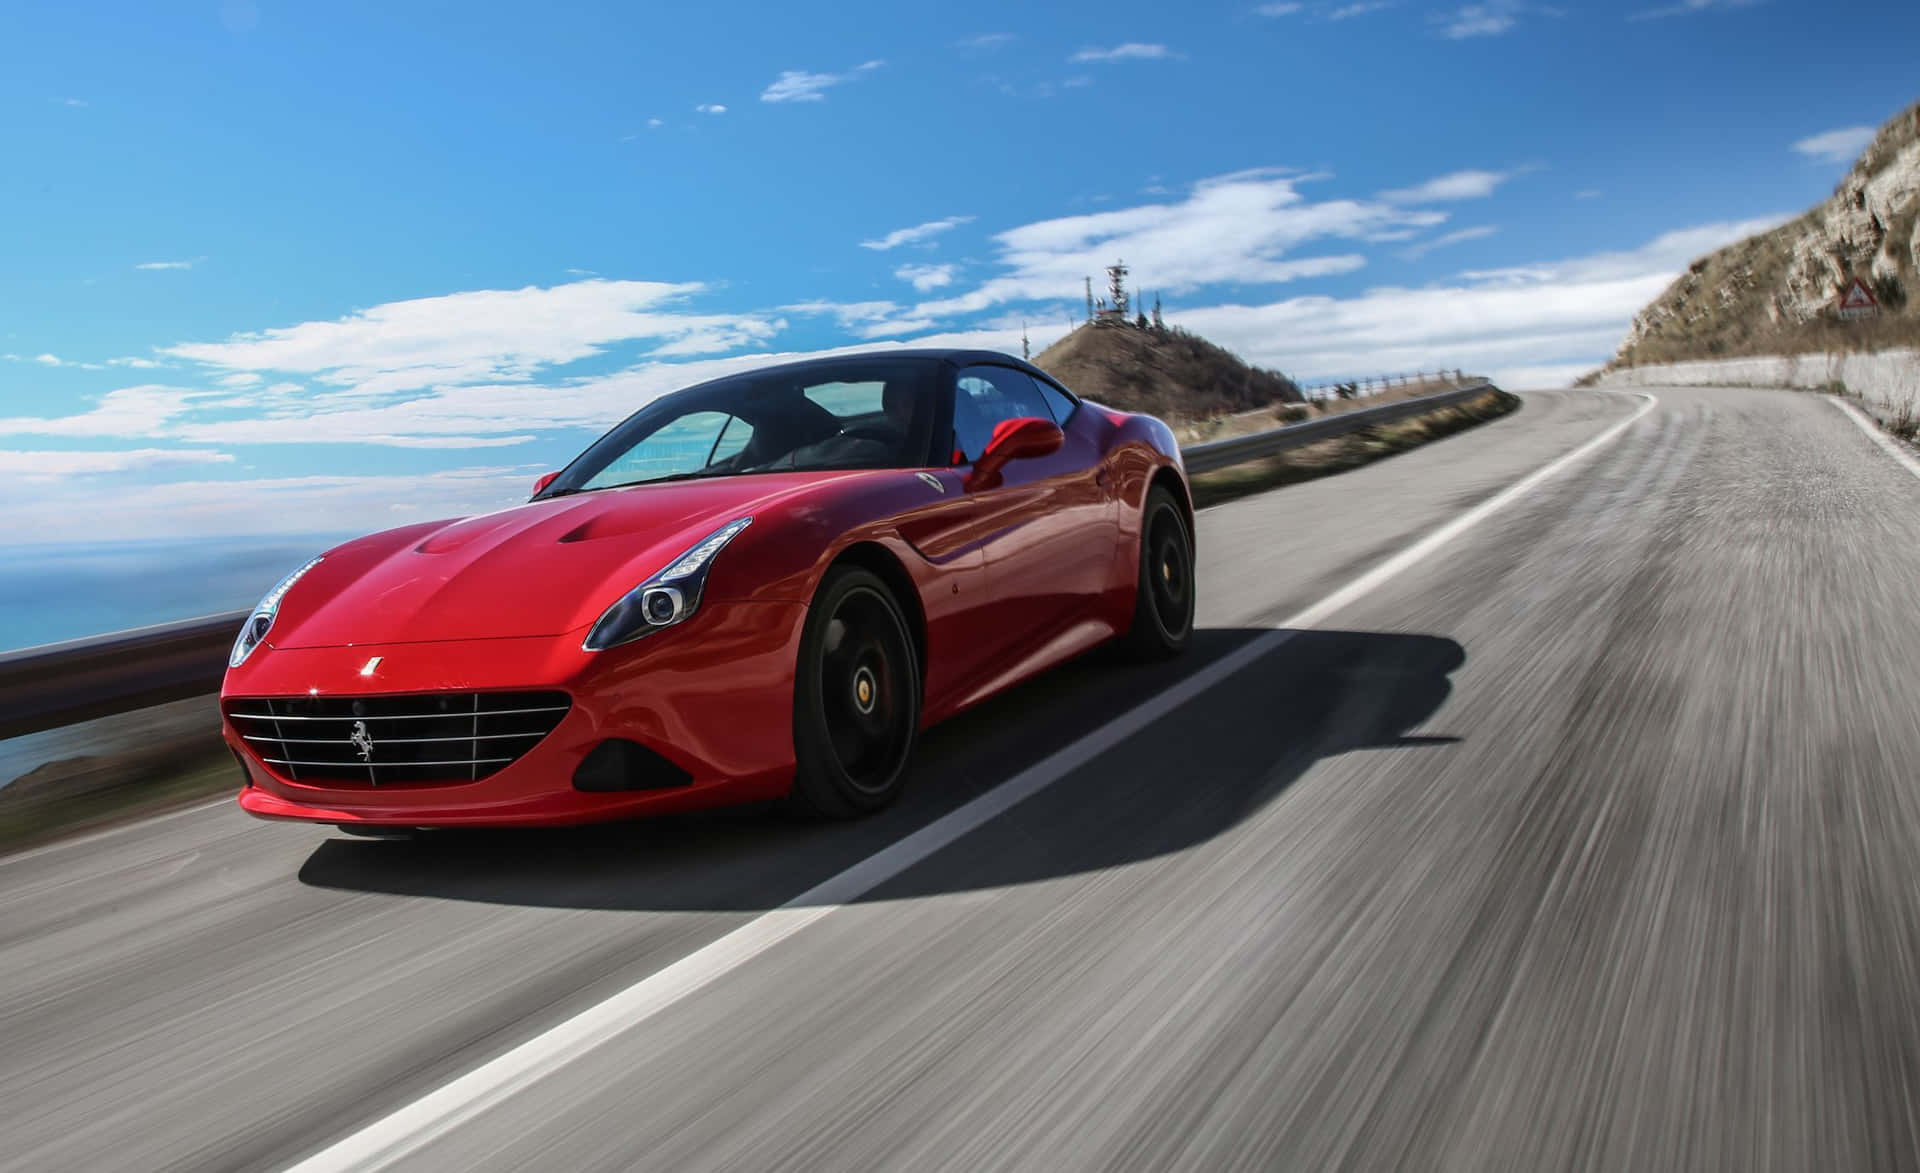 Stunning Red Ferrari California T Showcased in Elegance Wallpaper